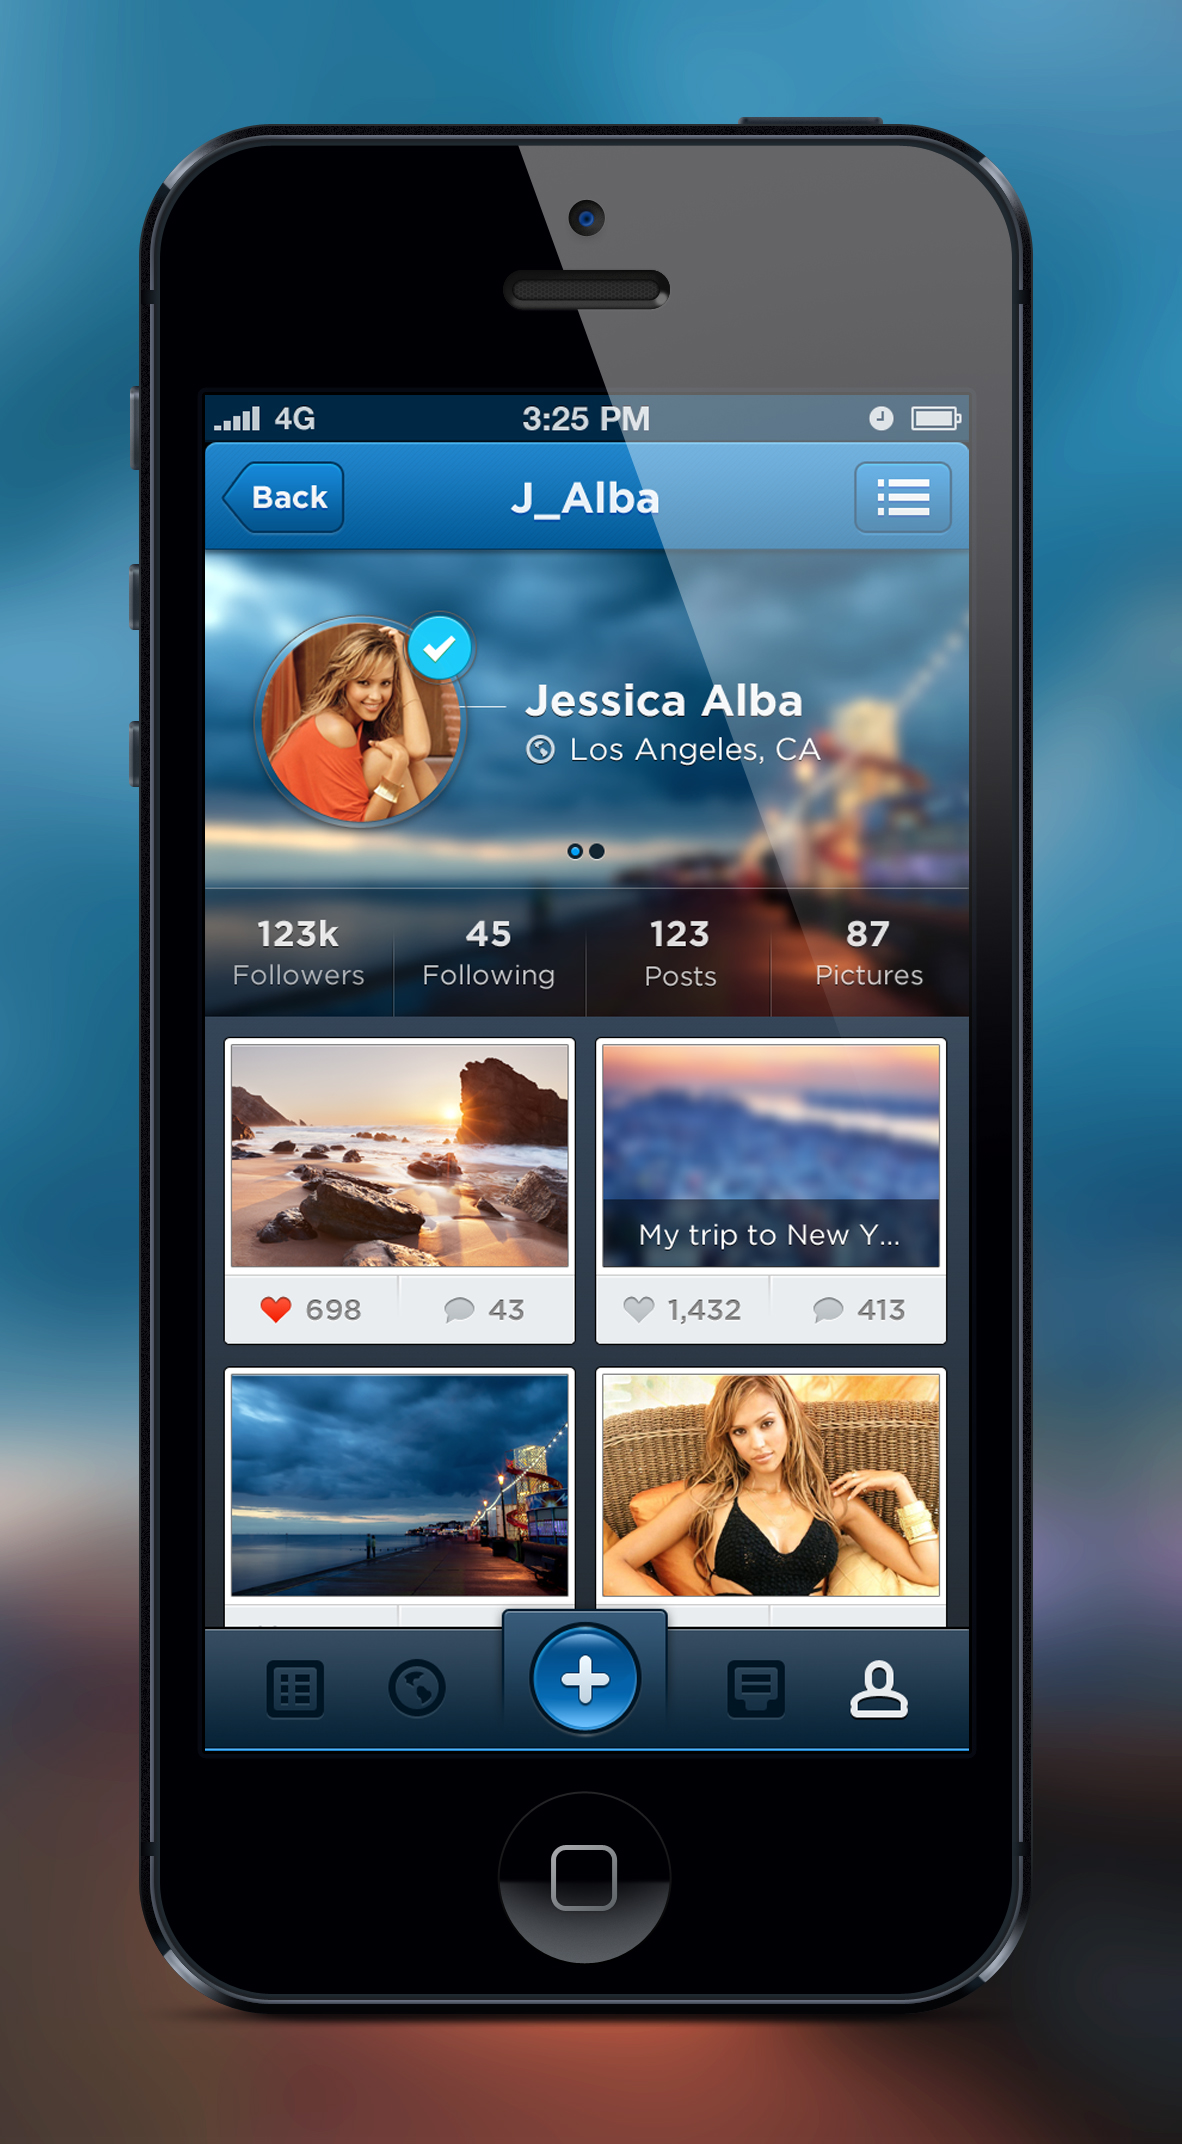 app  iOS  iphone  Application  profile  UI  user interface  GUI social network  sharing